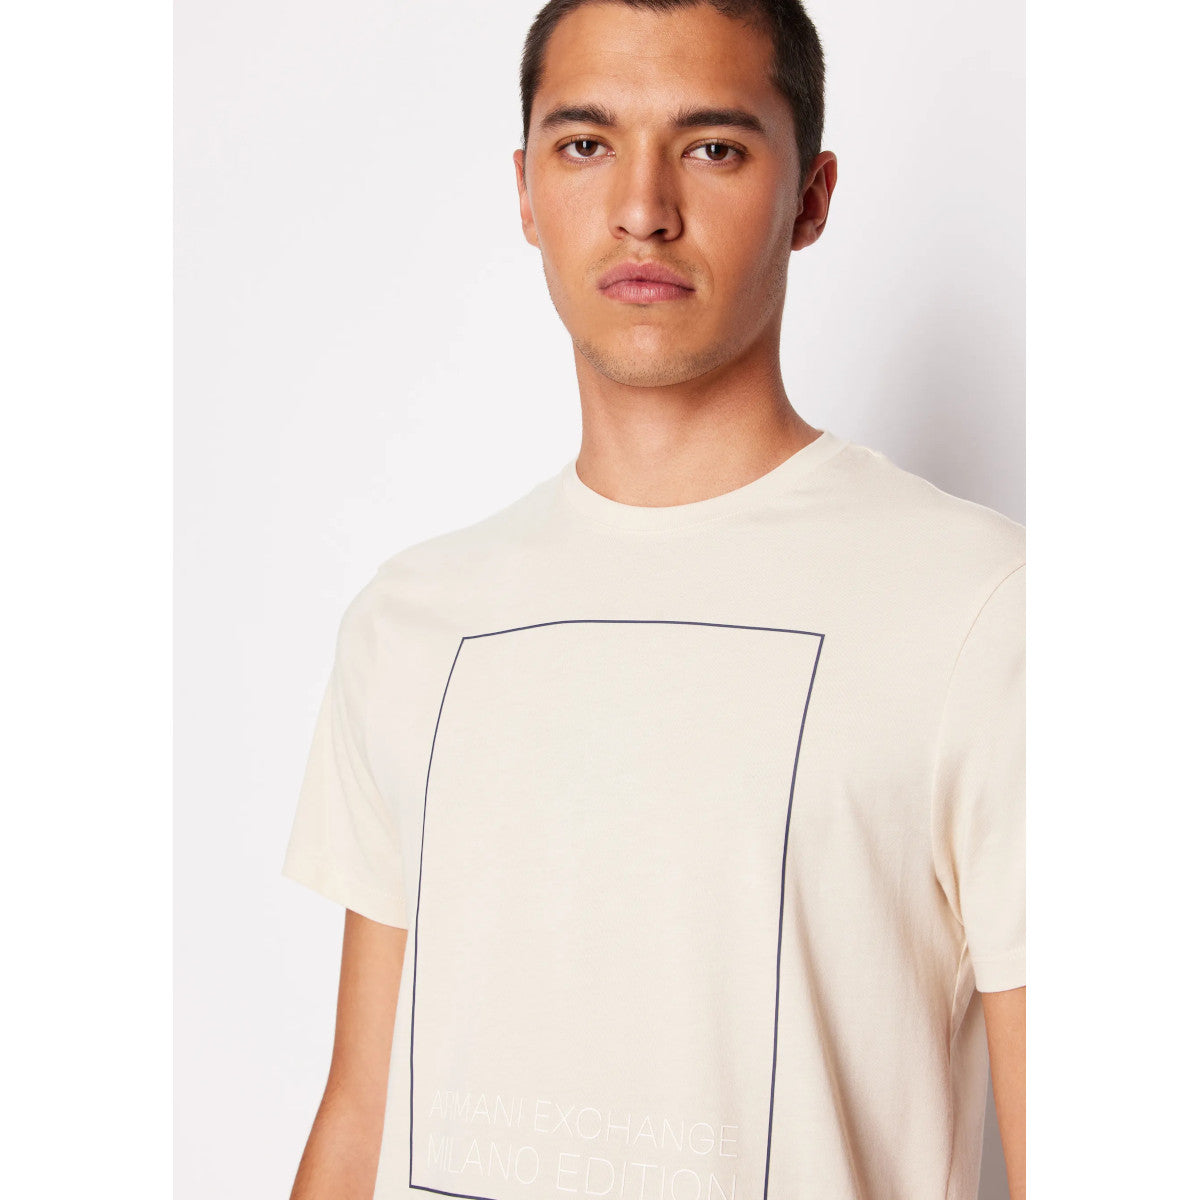 Armani Exchange Milano Edition T-Shirt 1792 Beige